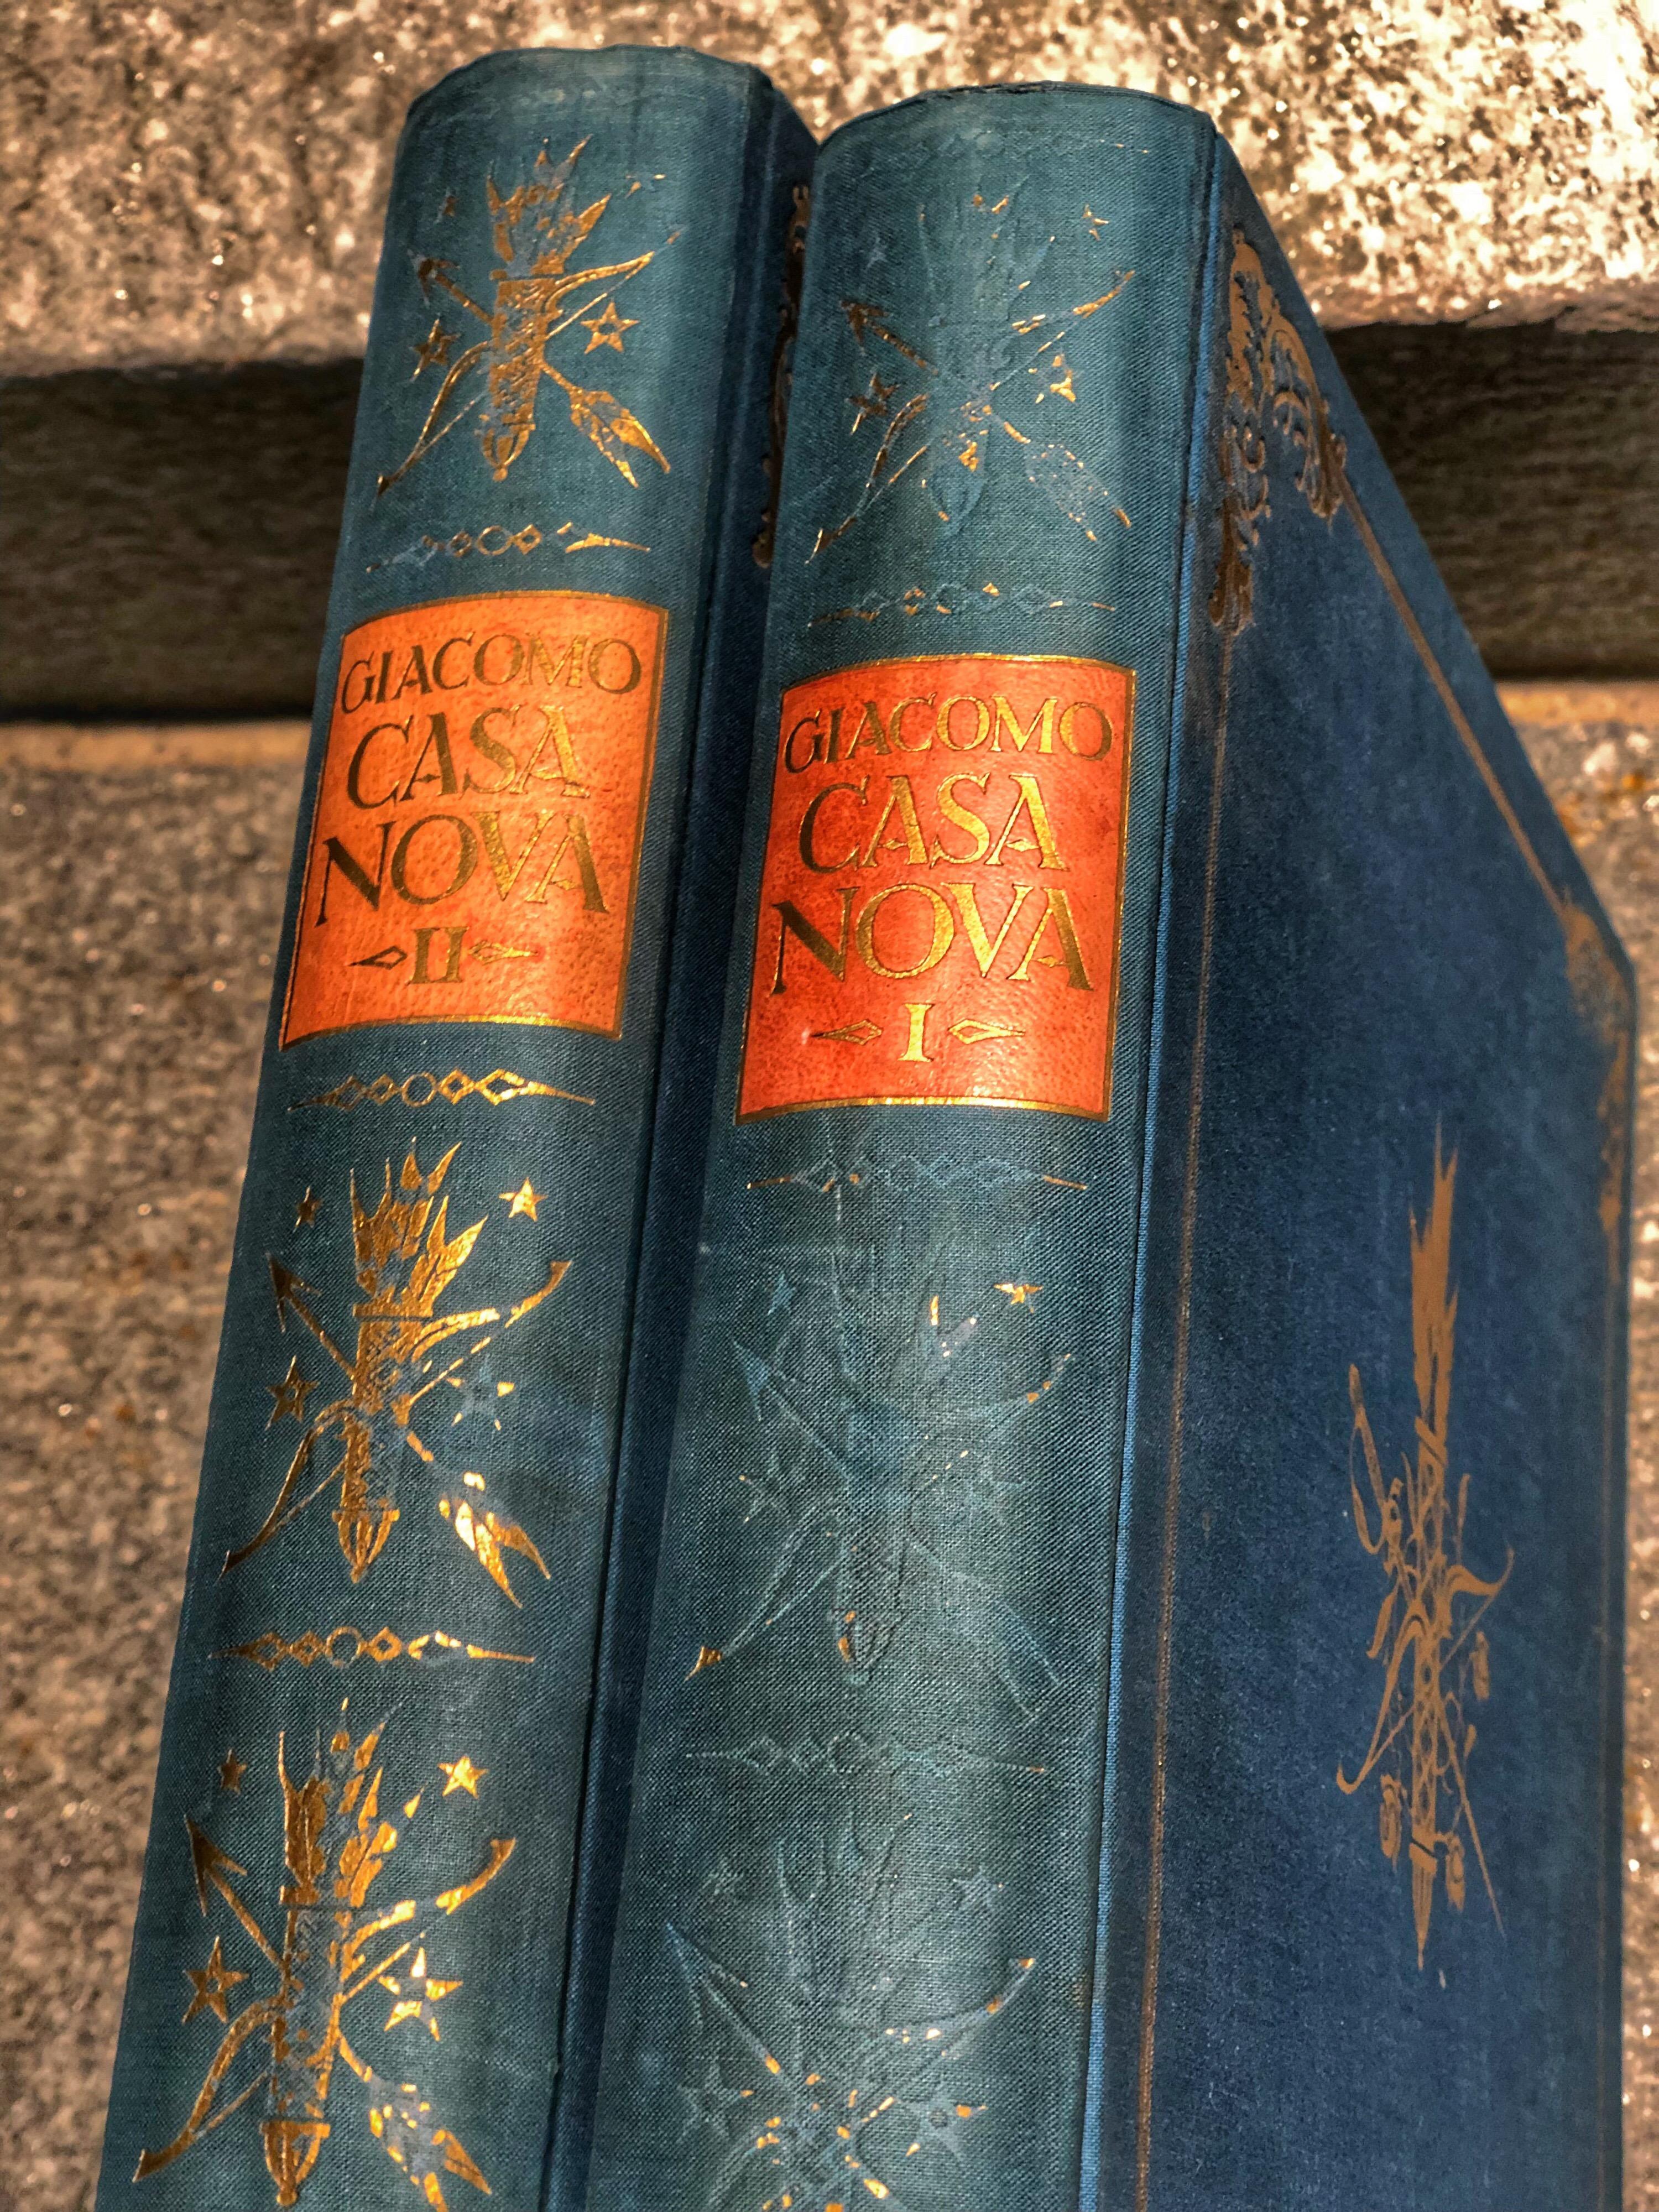 German Illustrated Memories of Giacomo Casanova Berlin, Verlag Neufeld & Henius, 1925